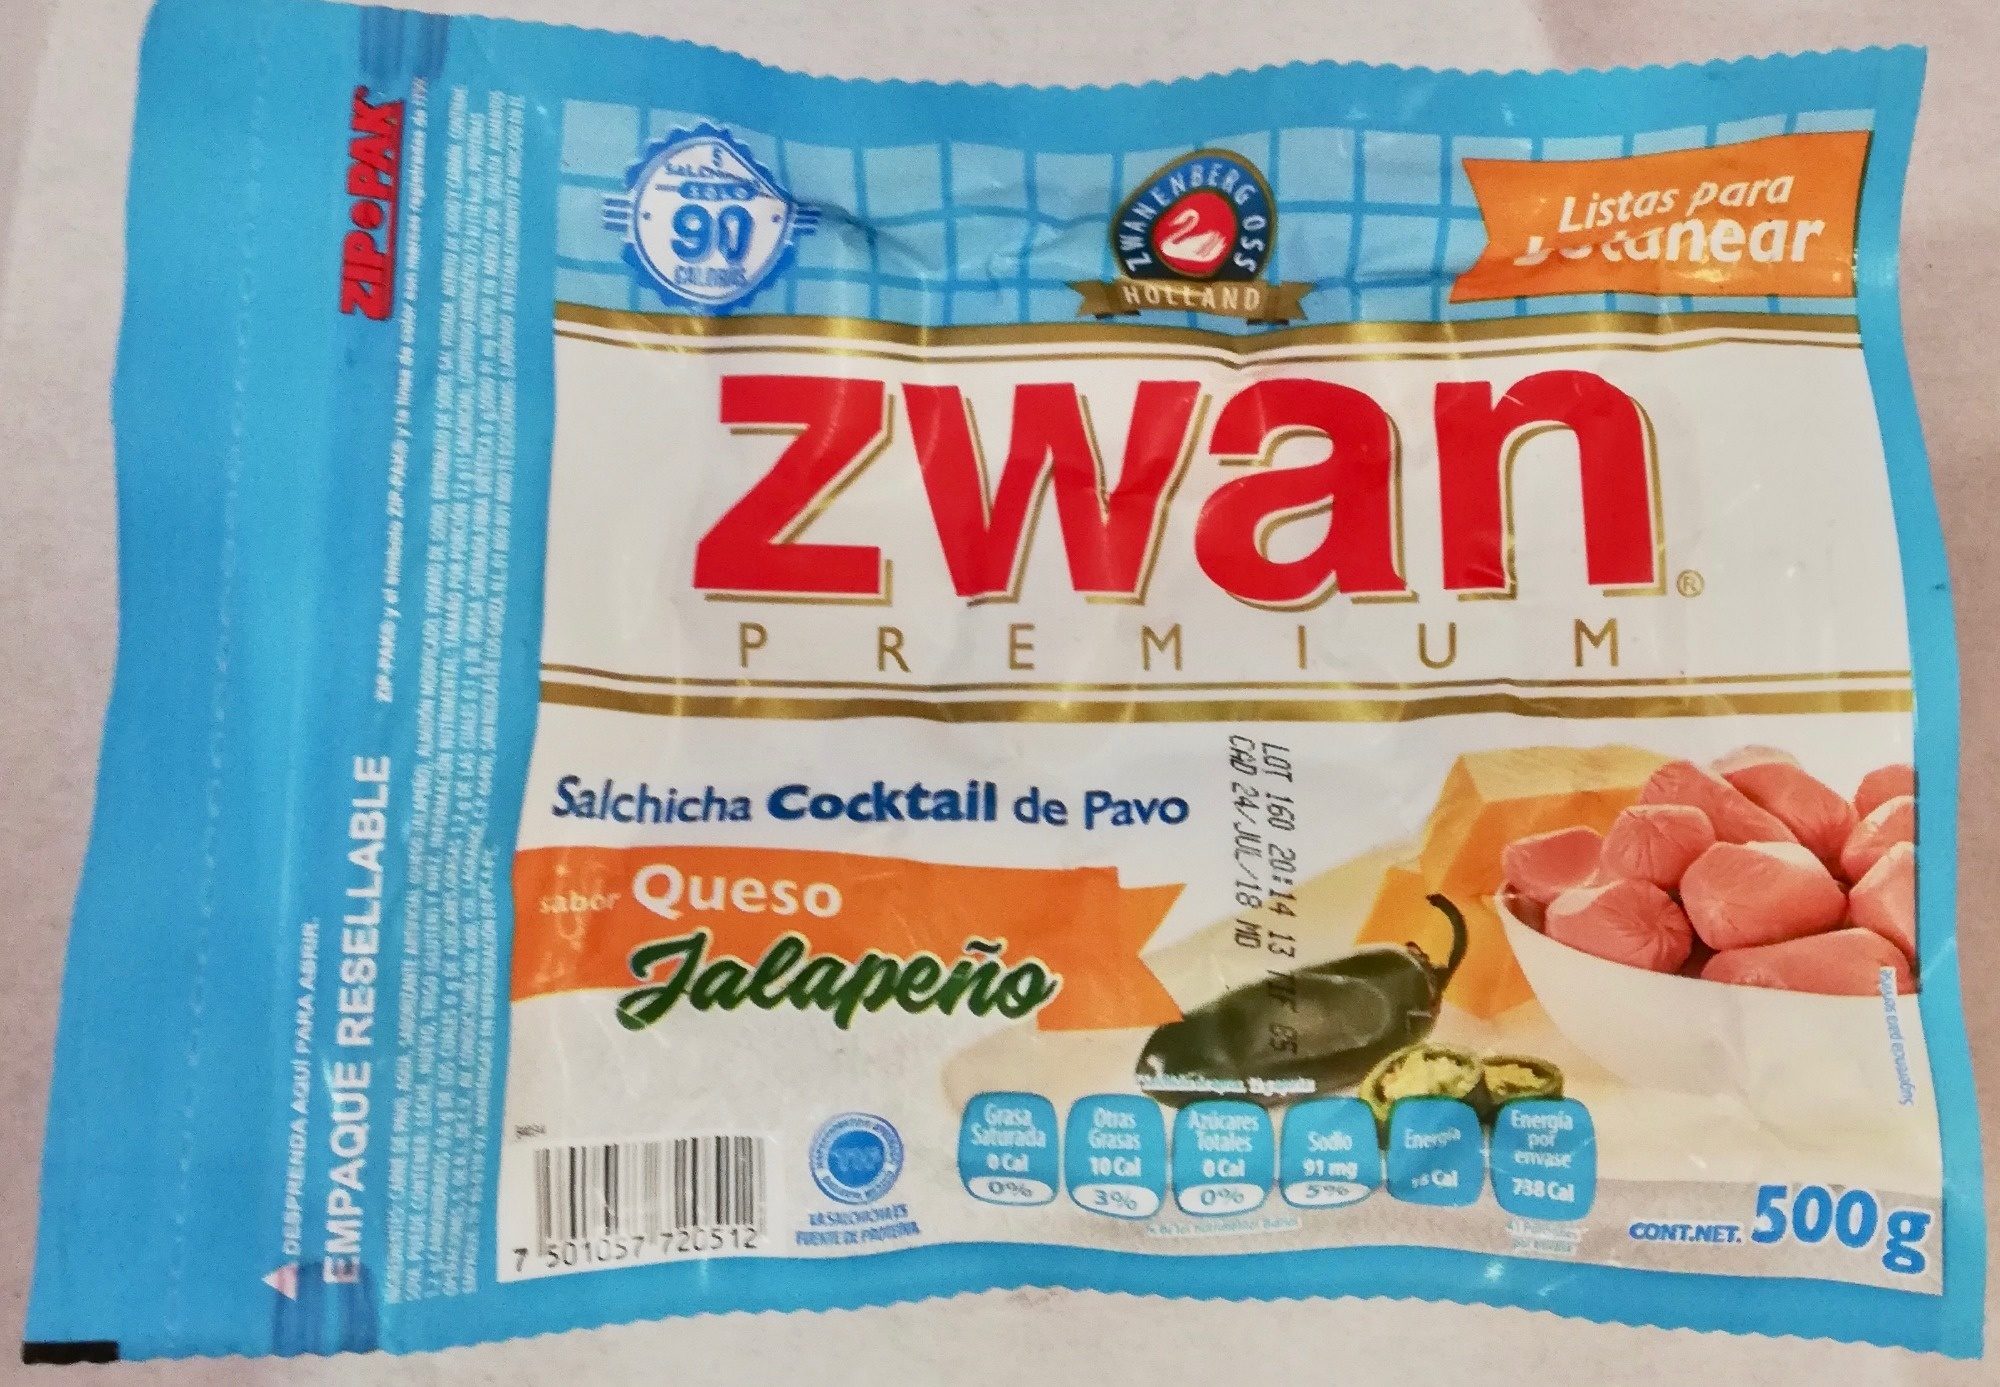 Zwan premium Salchicha Cocktail de pavo sabor queso jalapeño - Product - es